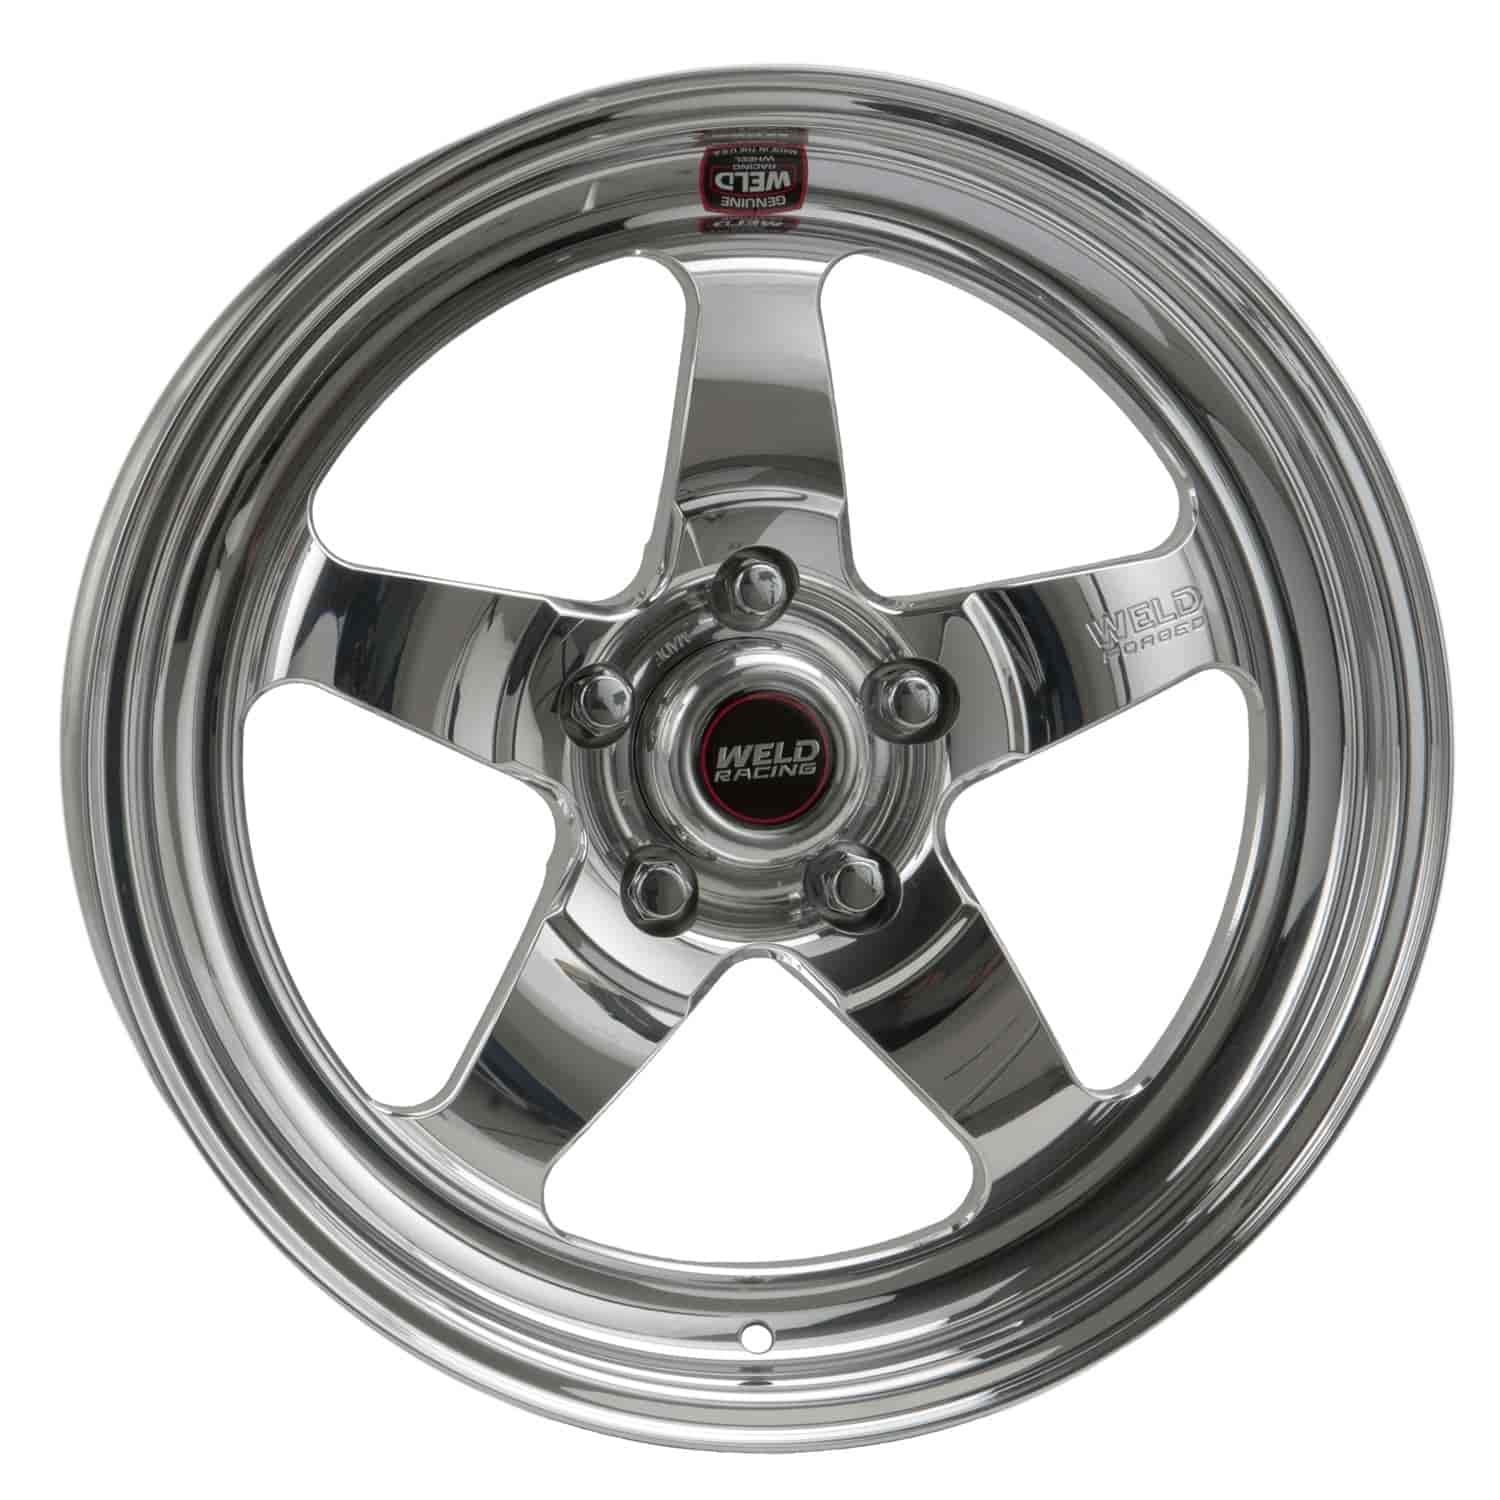 RT-S Series Wheel Size: 17" x 7" Bolt Circle: 5 x 120mm Rear Spacing: 5.30"